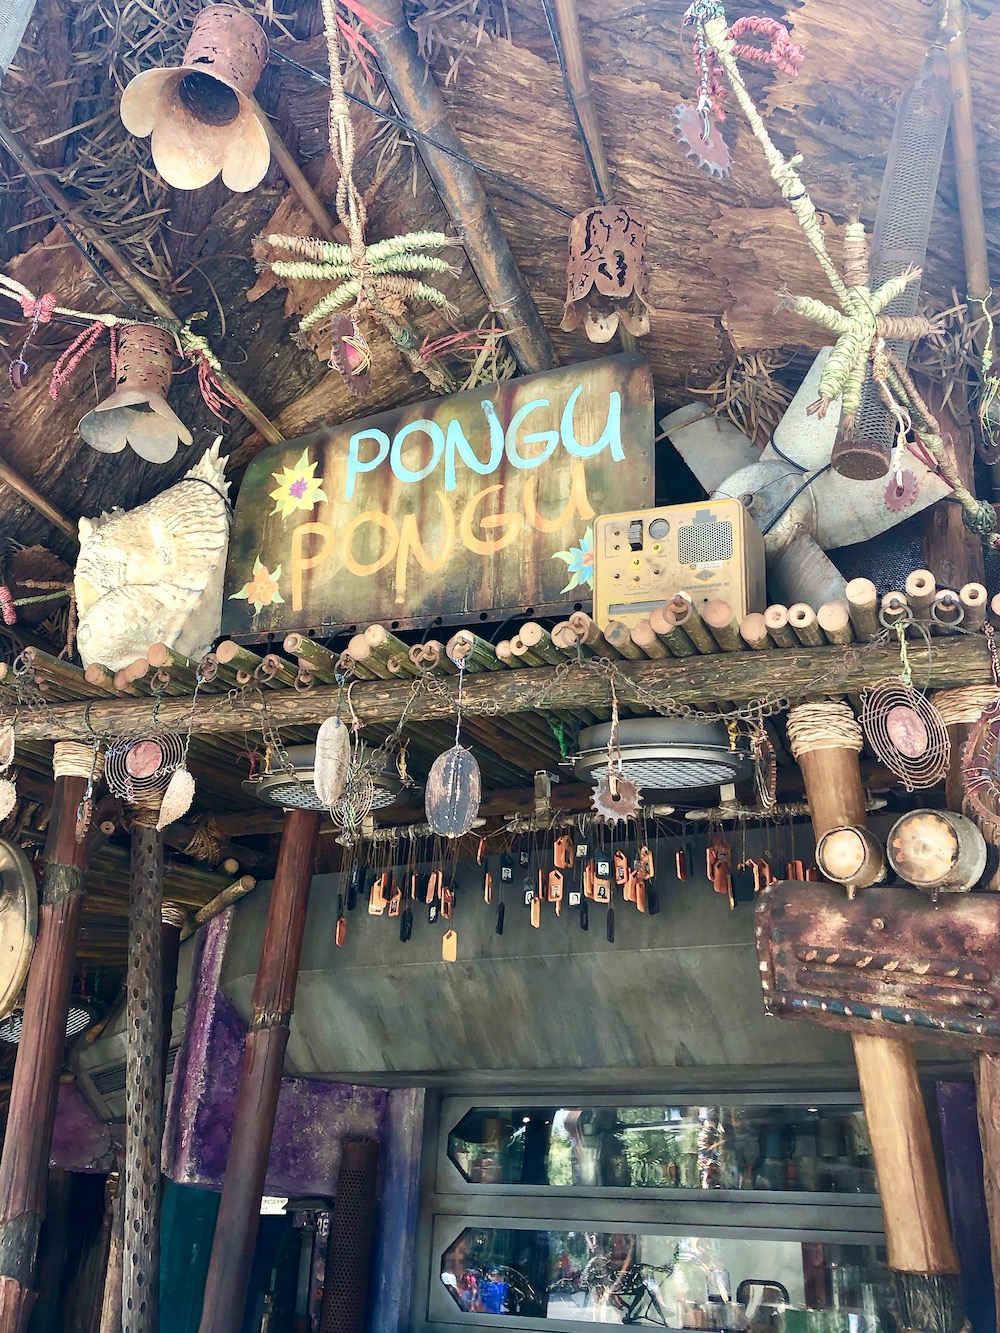 Pongu Pongu Snack Stand located in Pandora of Disney's Animal Kingdom